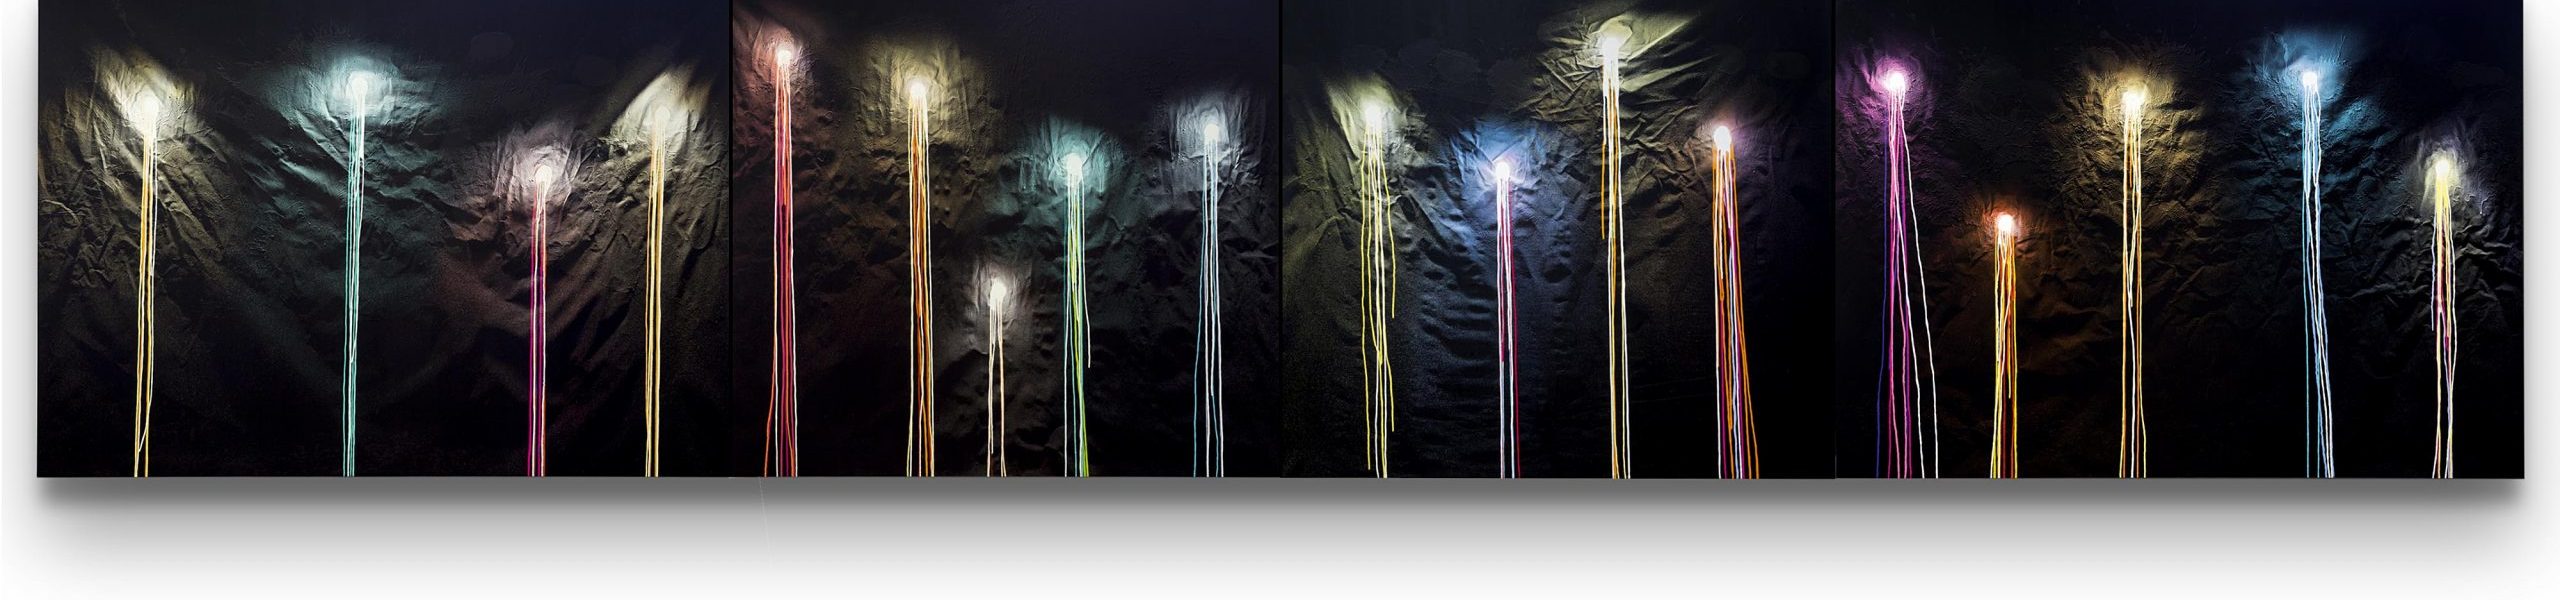 Omar Nassan. Luci ruvide 2022. Tecnica mista su tela | mixed media on canvas. 200x180 cm. Ph. ©Ludovica Mangini